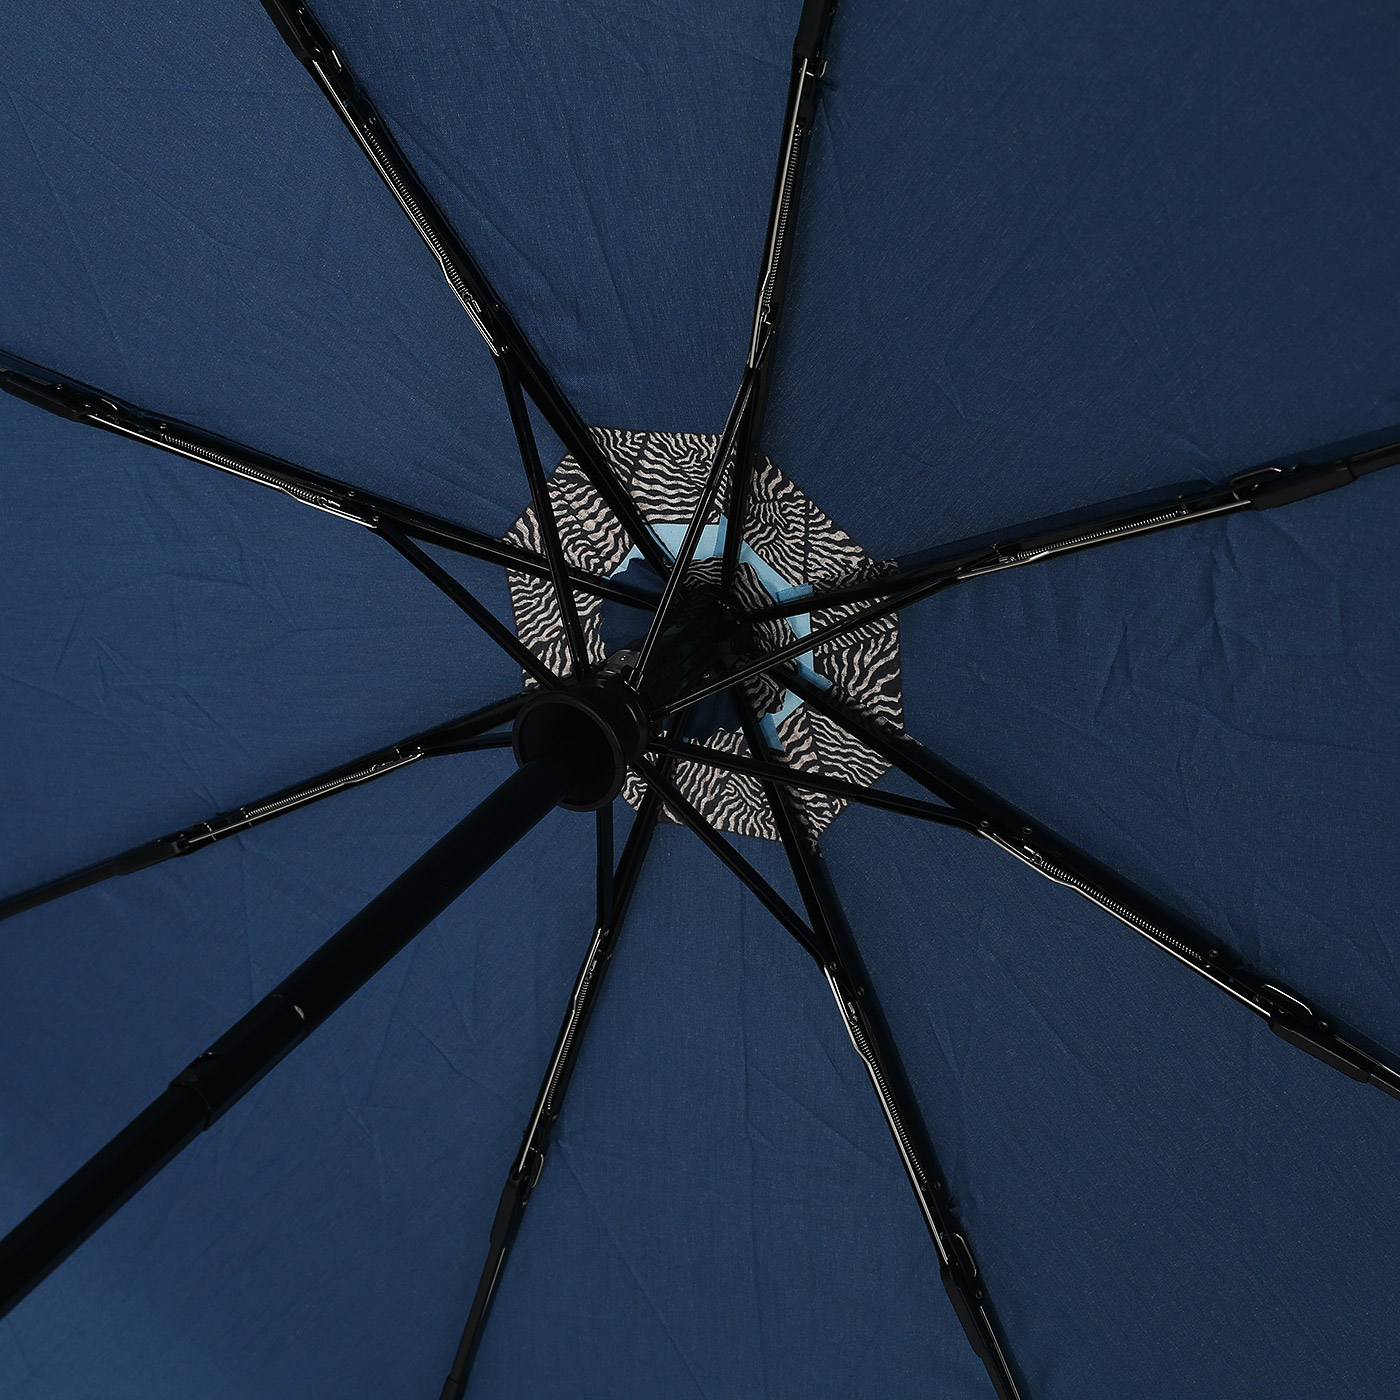 Складной зонт Doppler Magic Style